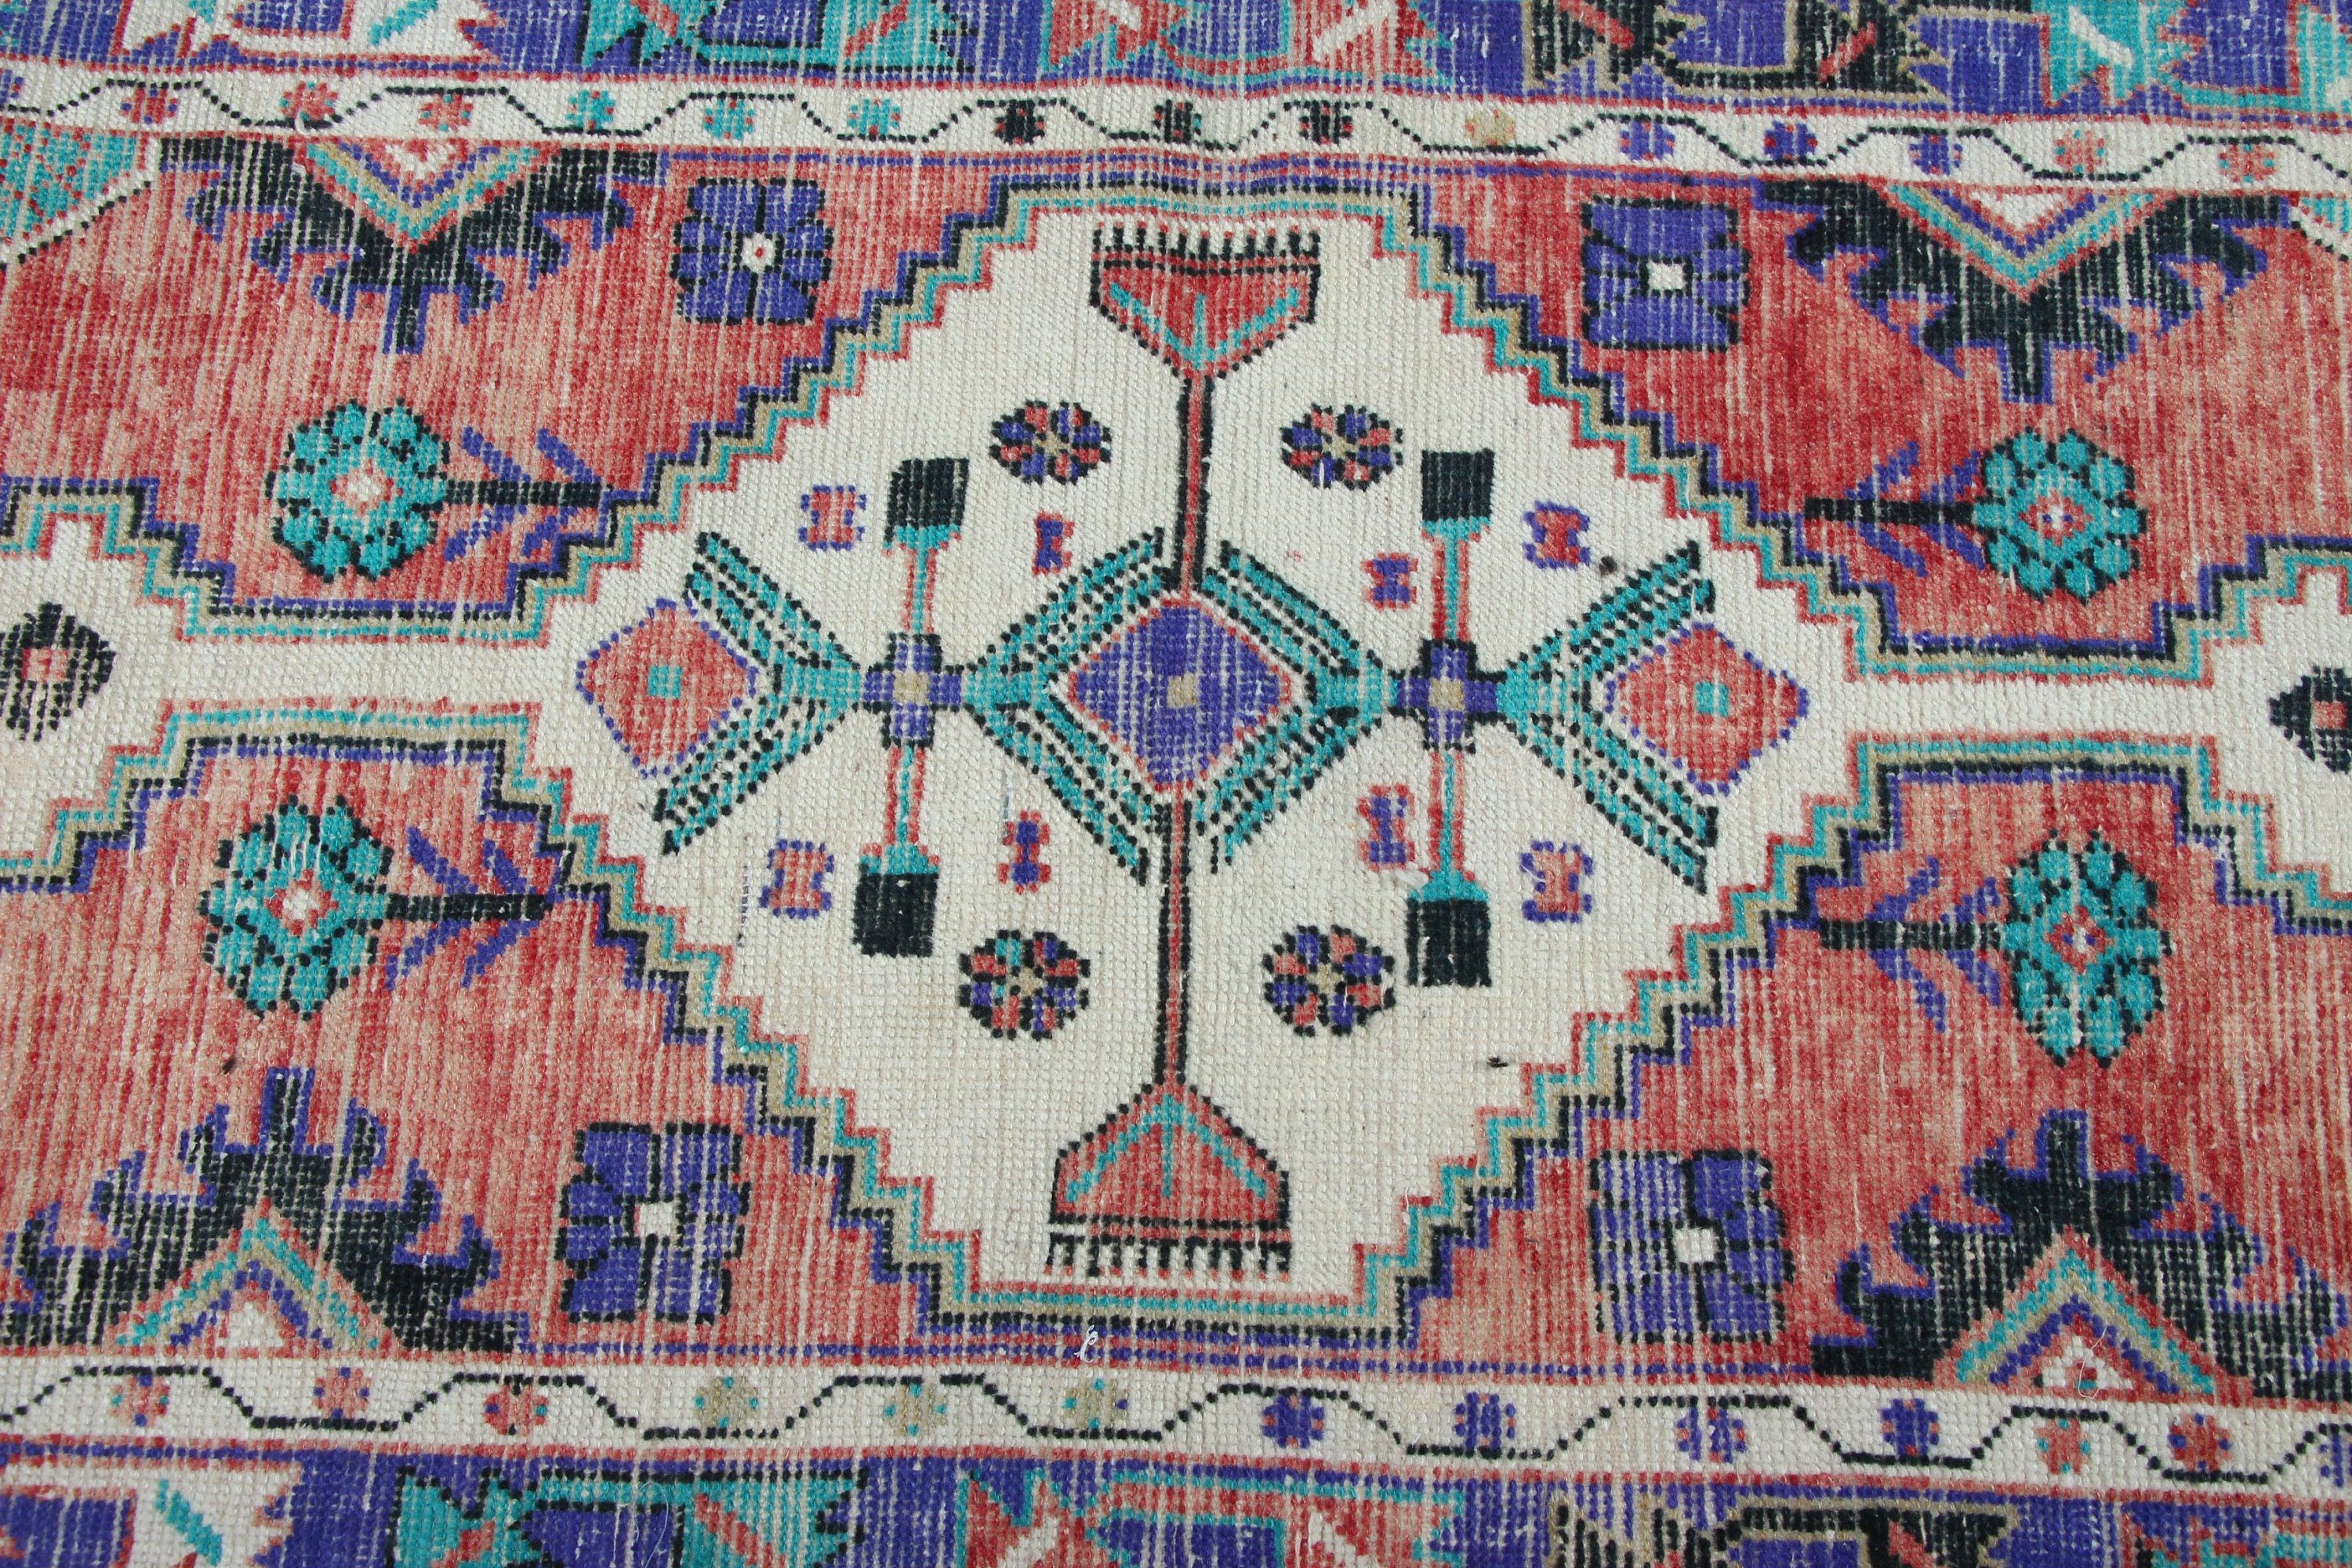 Floor Rugs, Turkish Rugs, Car Mat Rug, Wall Hanging Rugs, Moroccan Rug, Organic Rugs, Pink  2.8x5.3 ft Small Rug, Vintage Rug